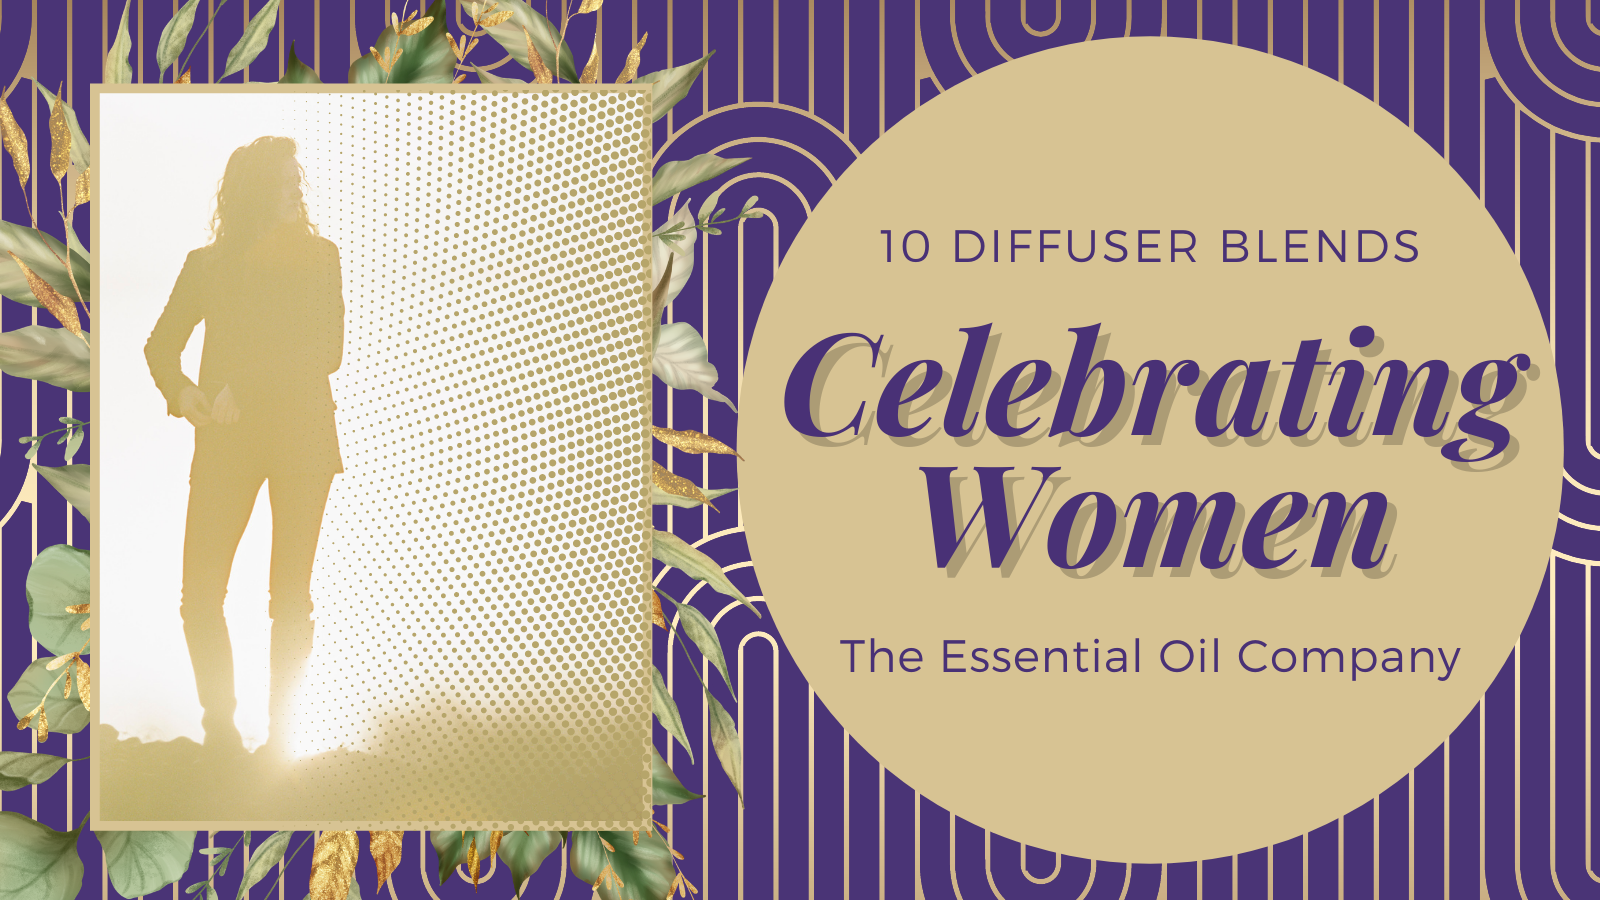 Celebrating women 10 diffuser blends